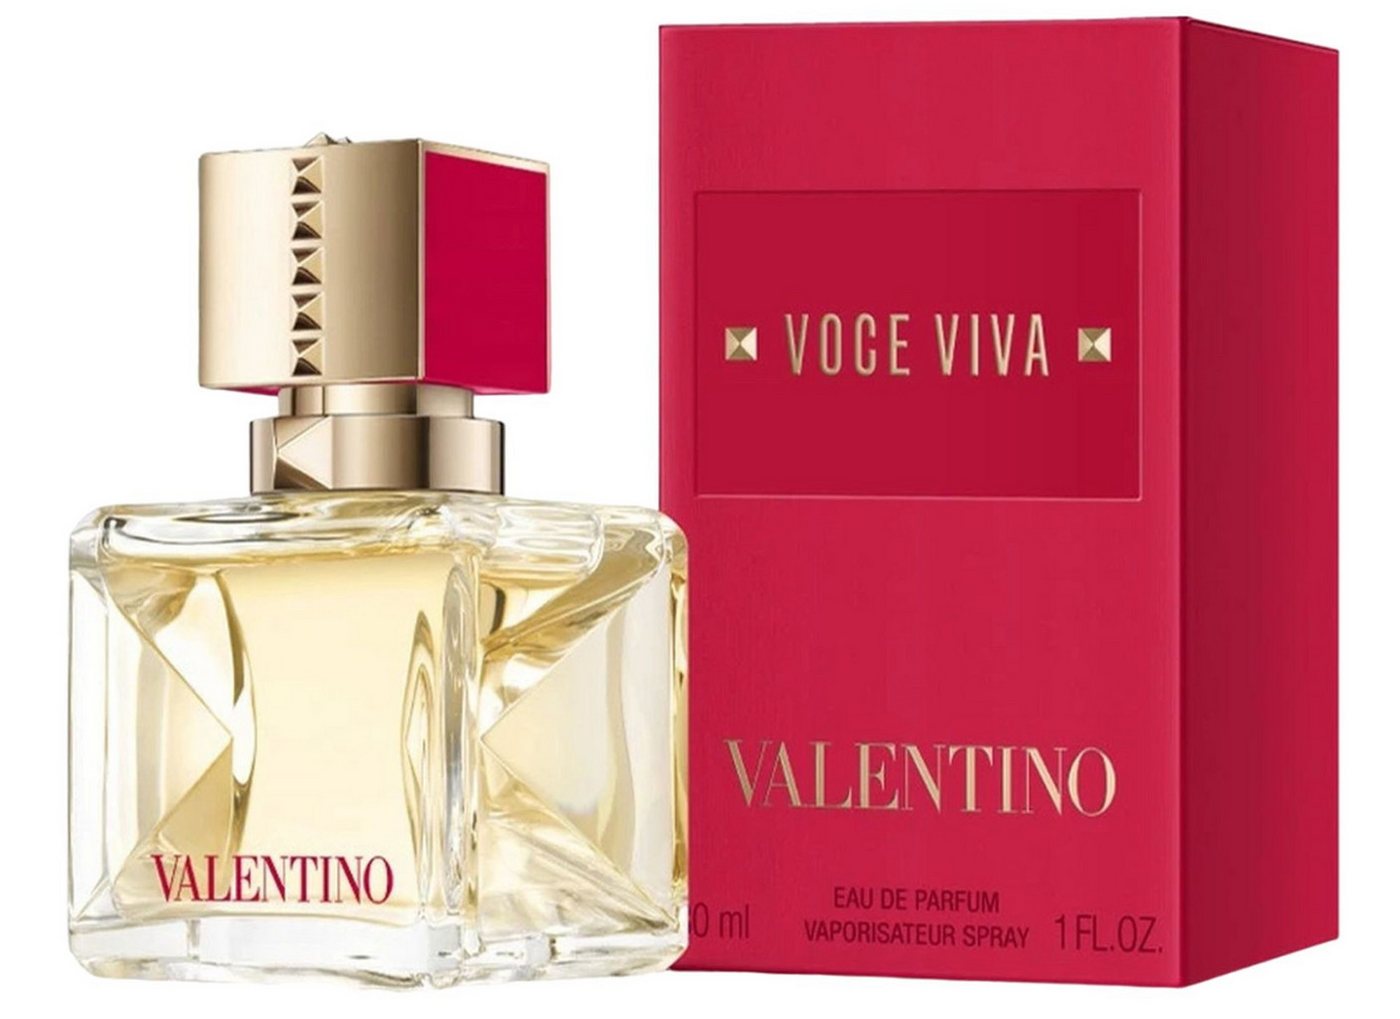 Valentino Eau de Parfum Voce Viva Eau de Parfum von Valentino